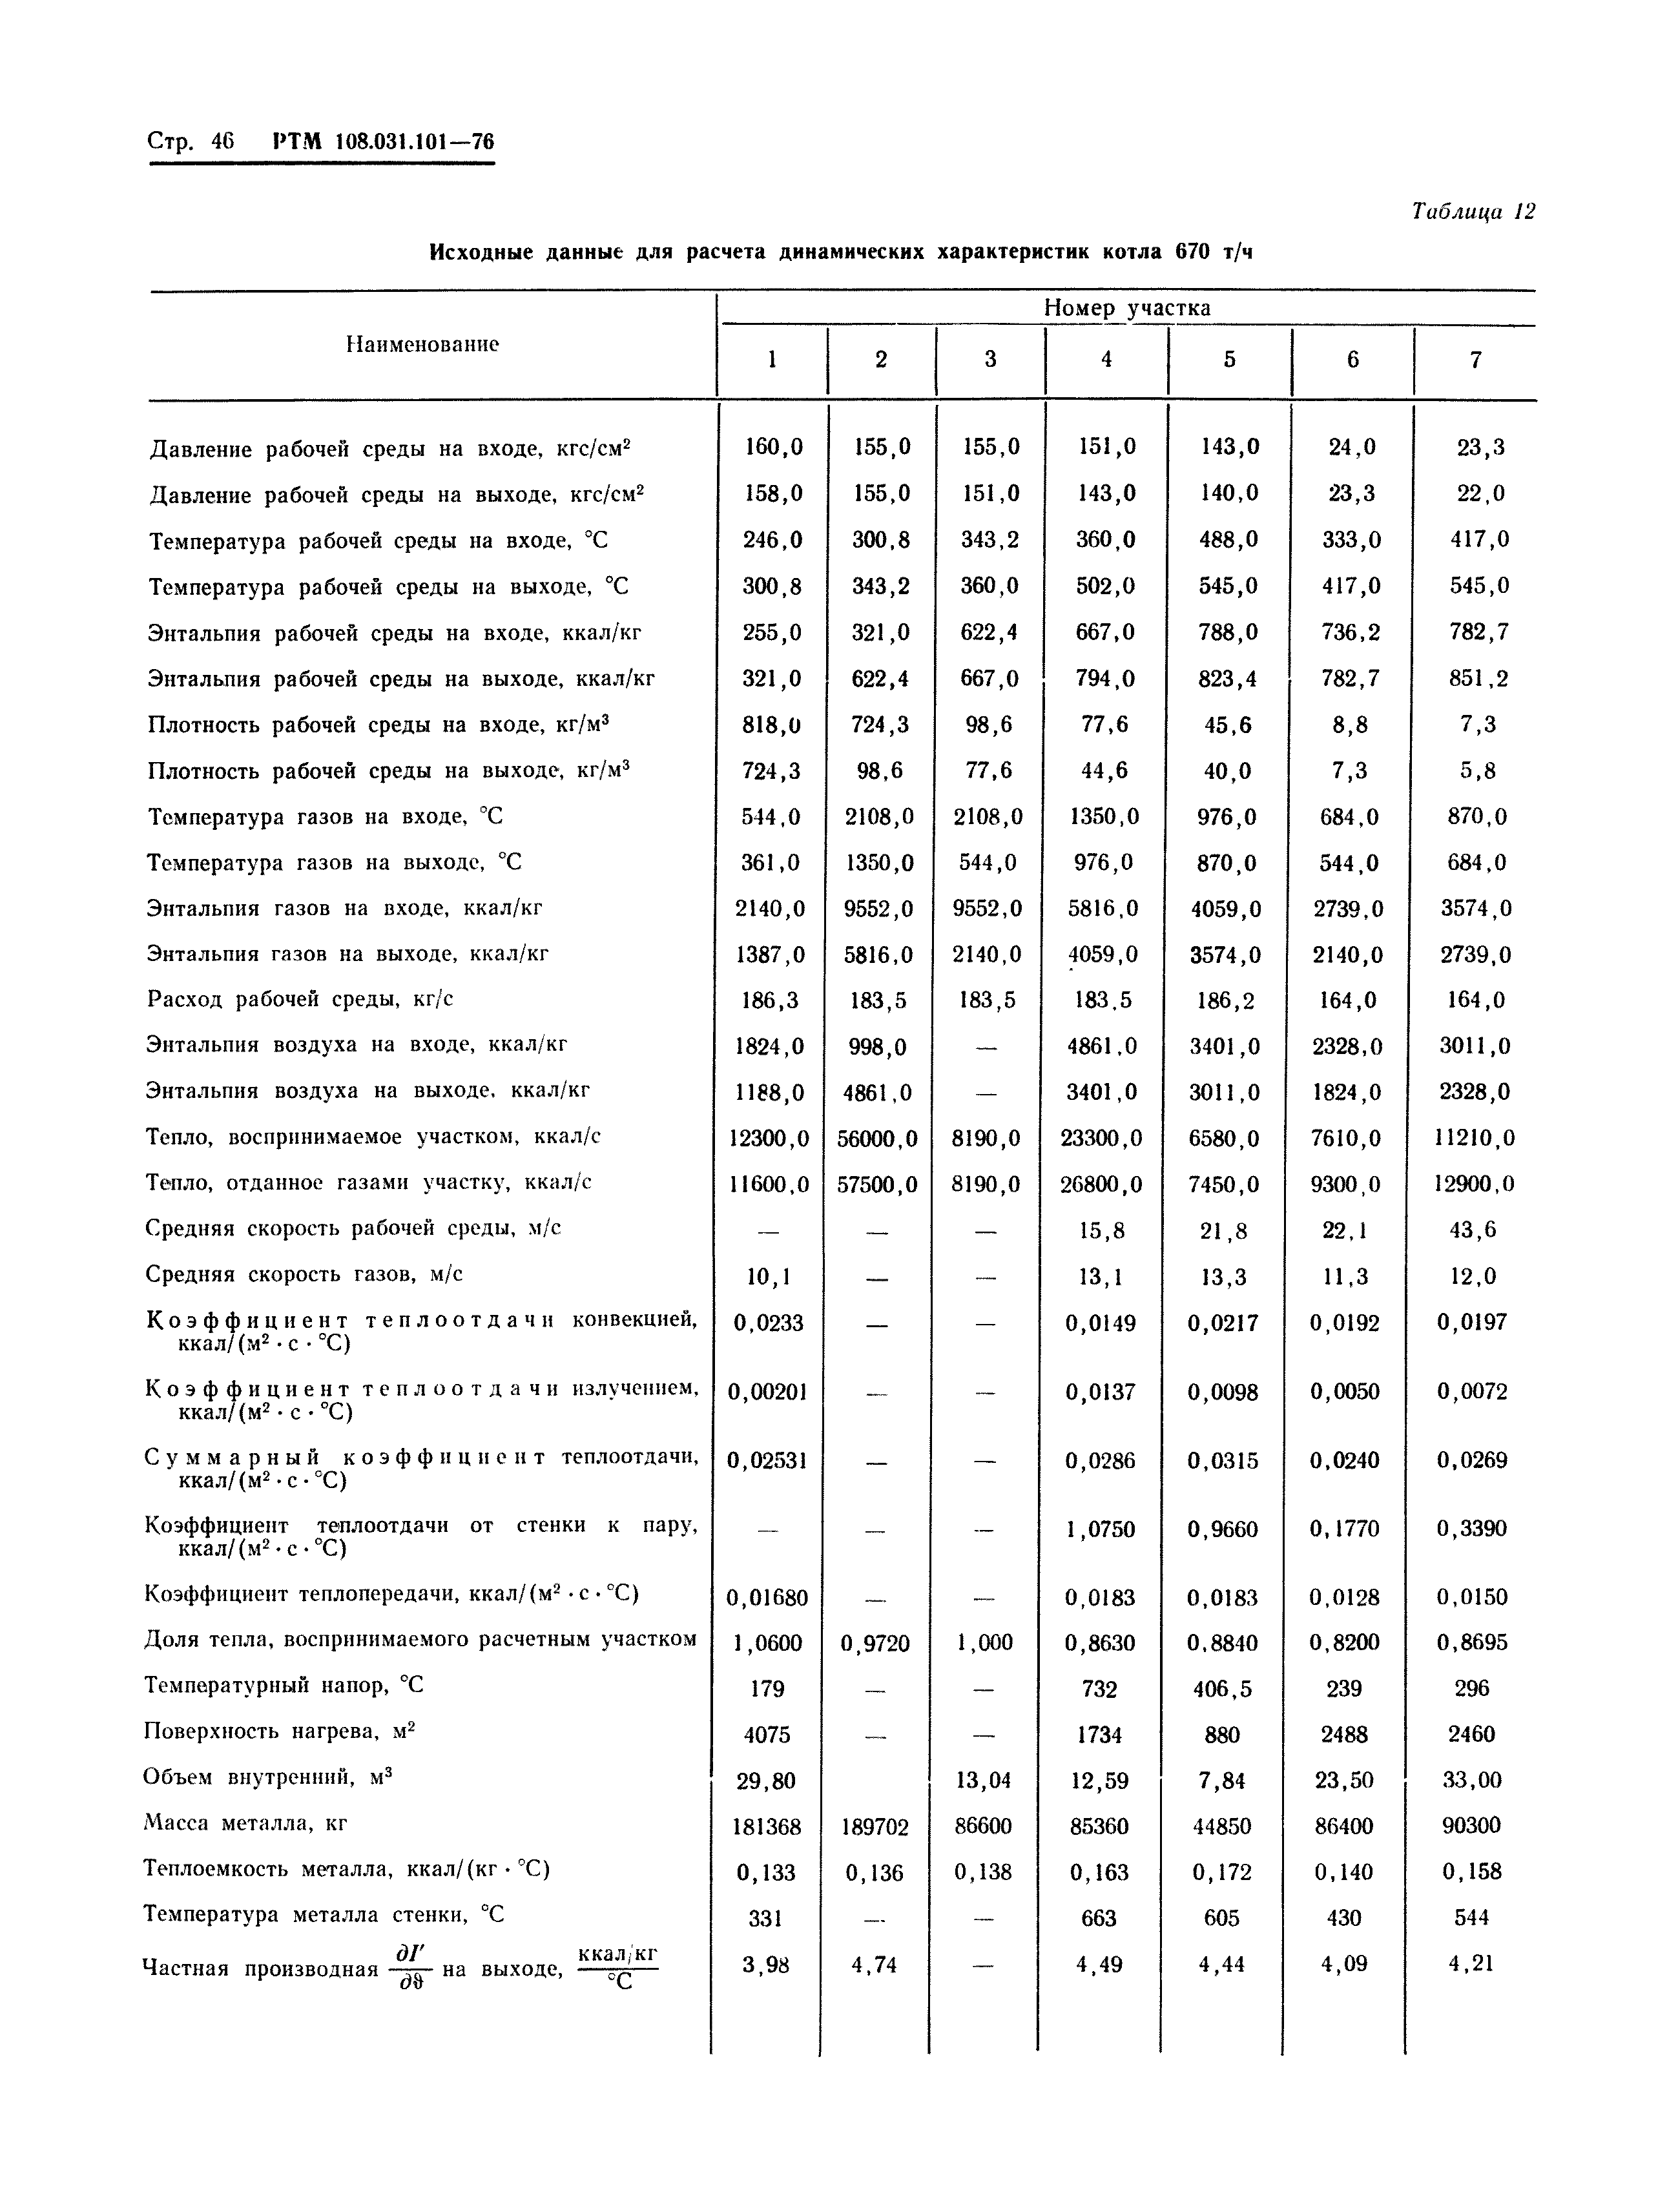 РТМ 108.031.101-76